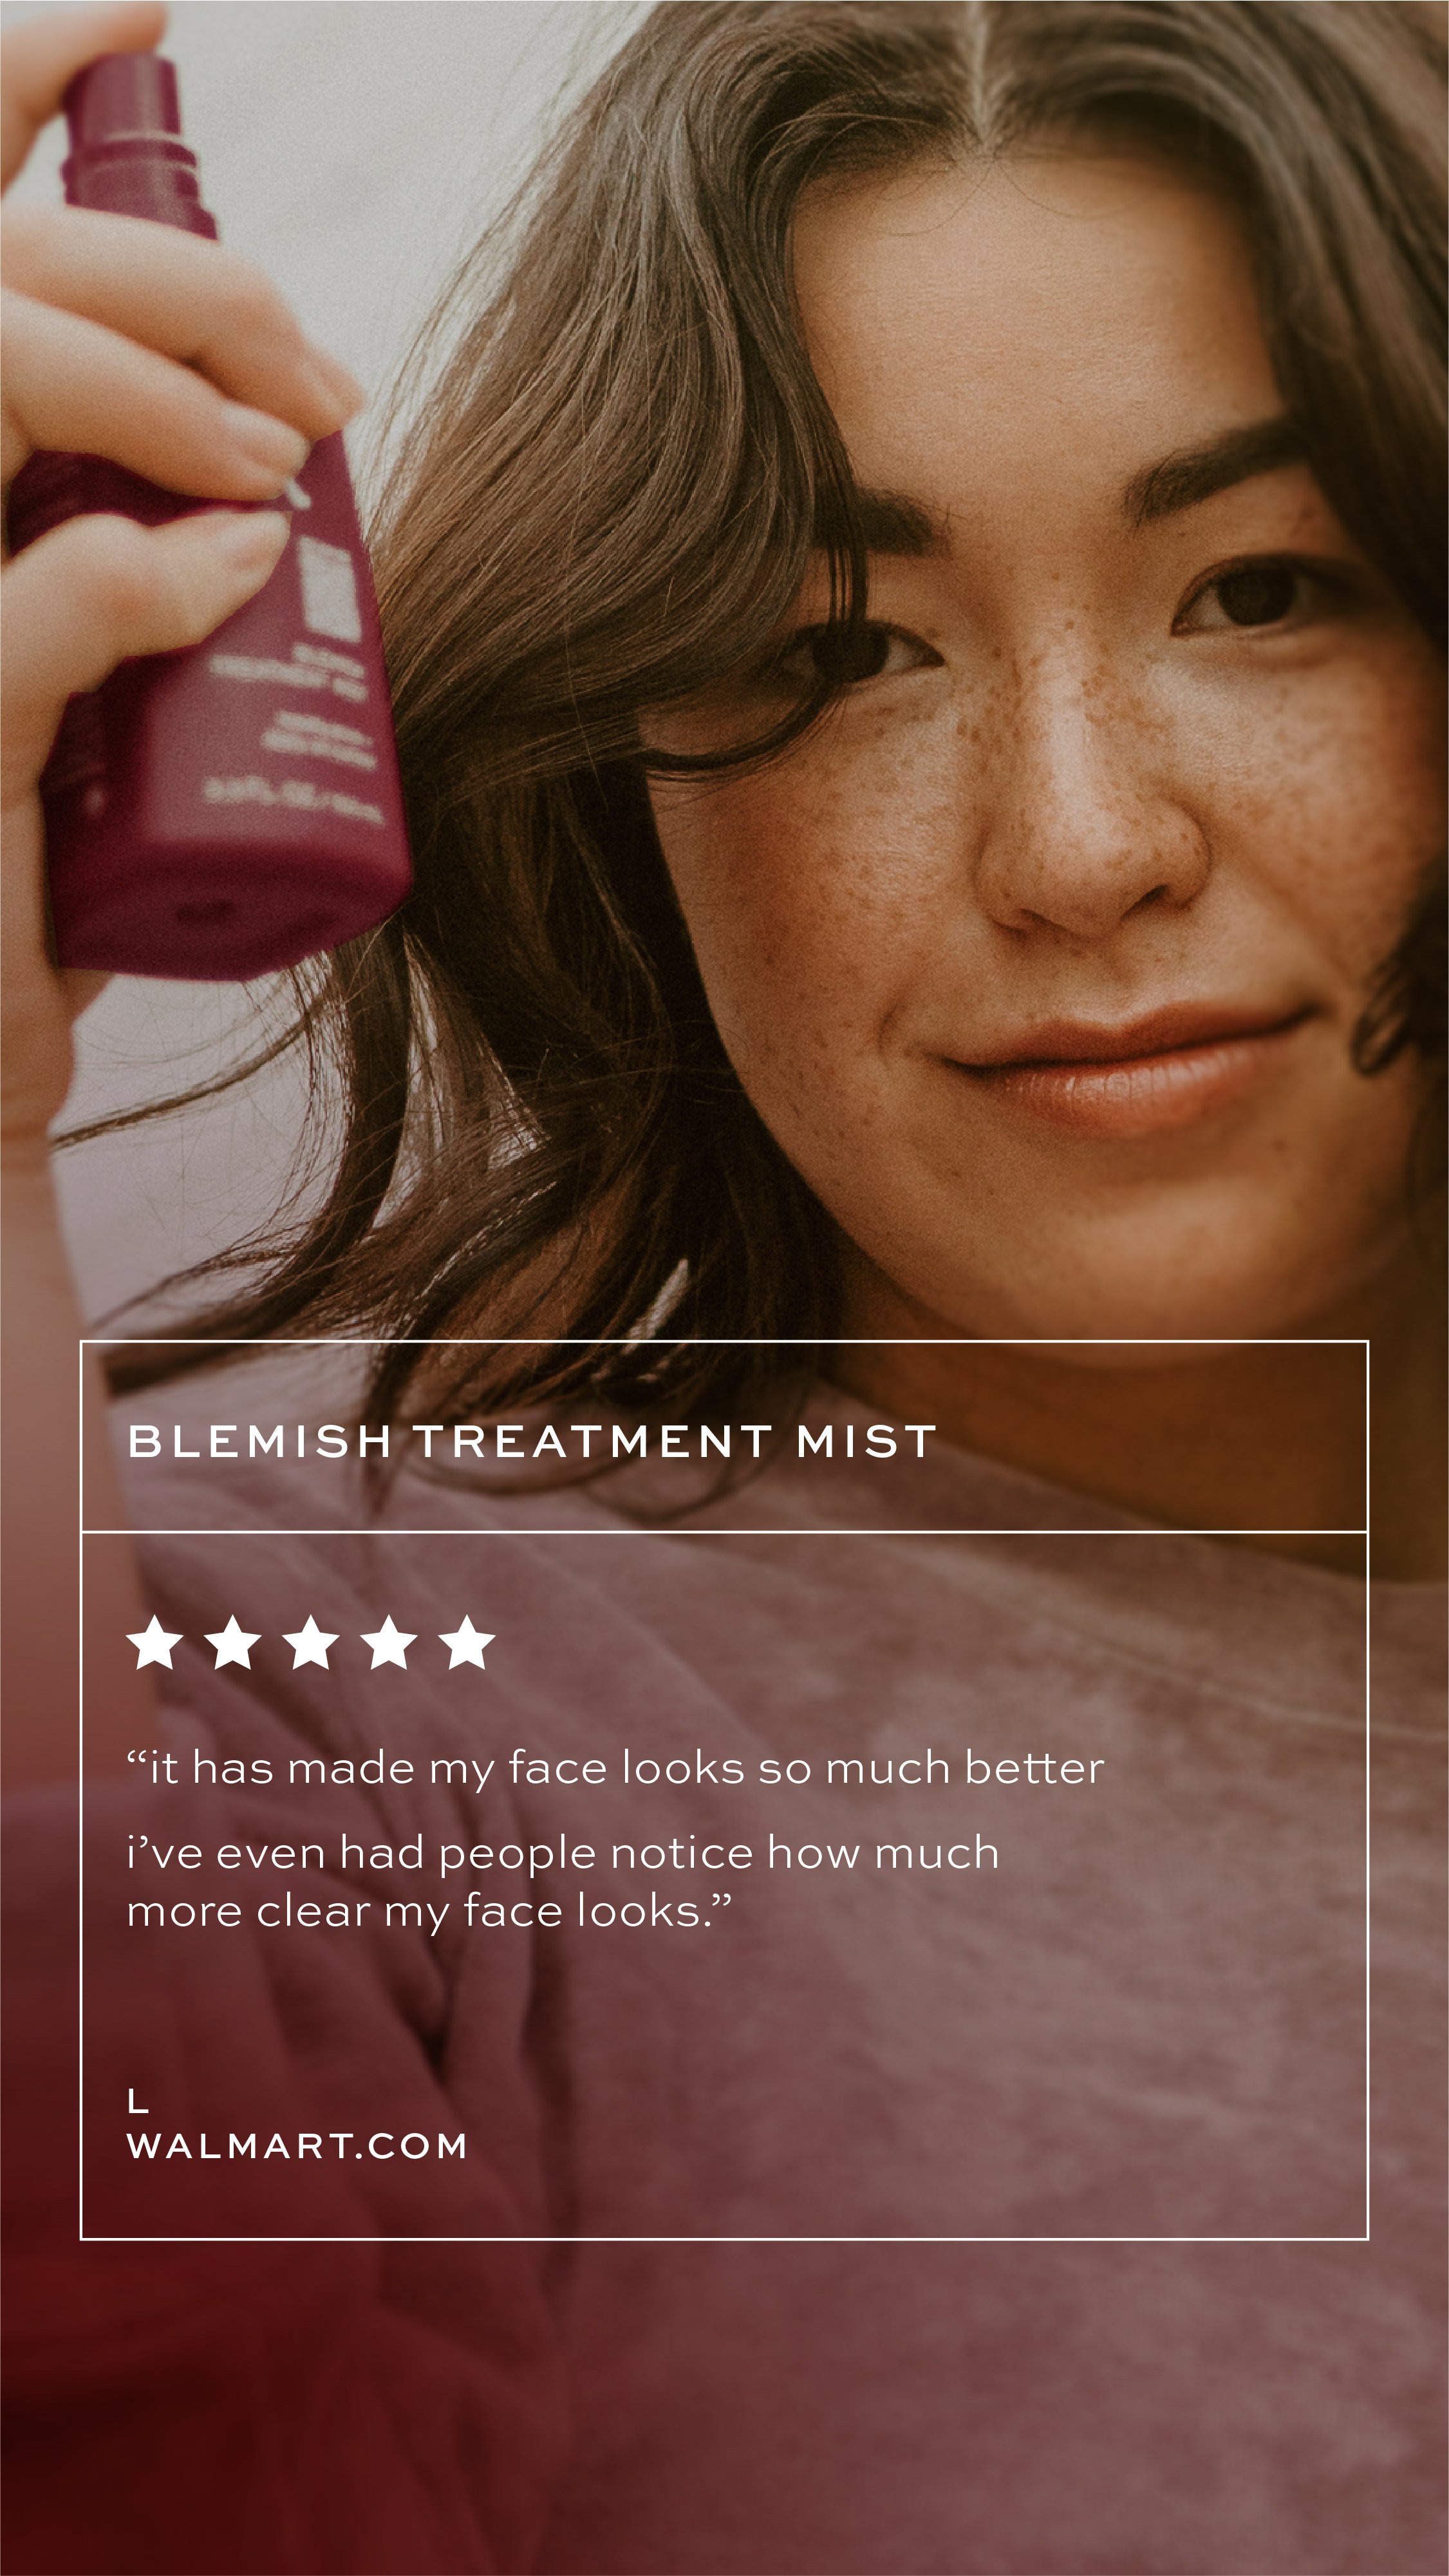 09_ITK_Social_Review-Template_Blemish-Treatment-Mist-03.jpg